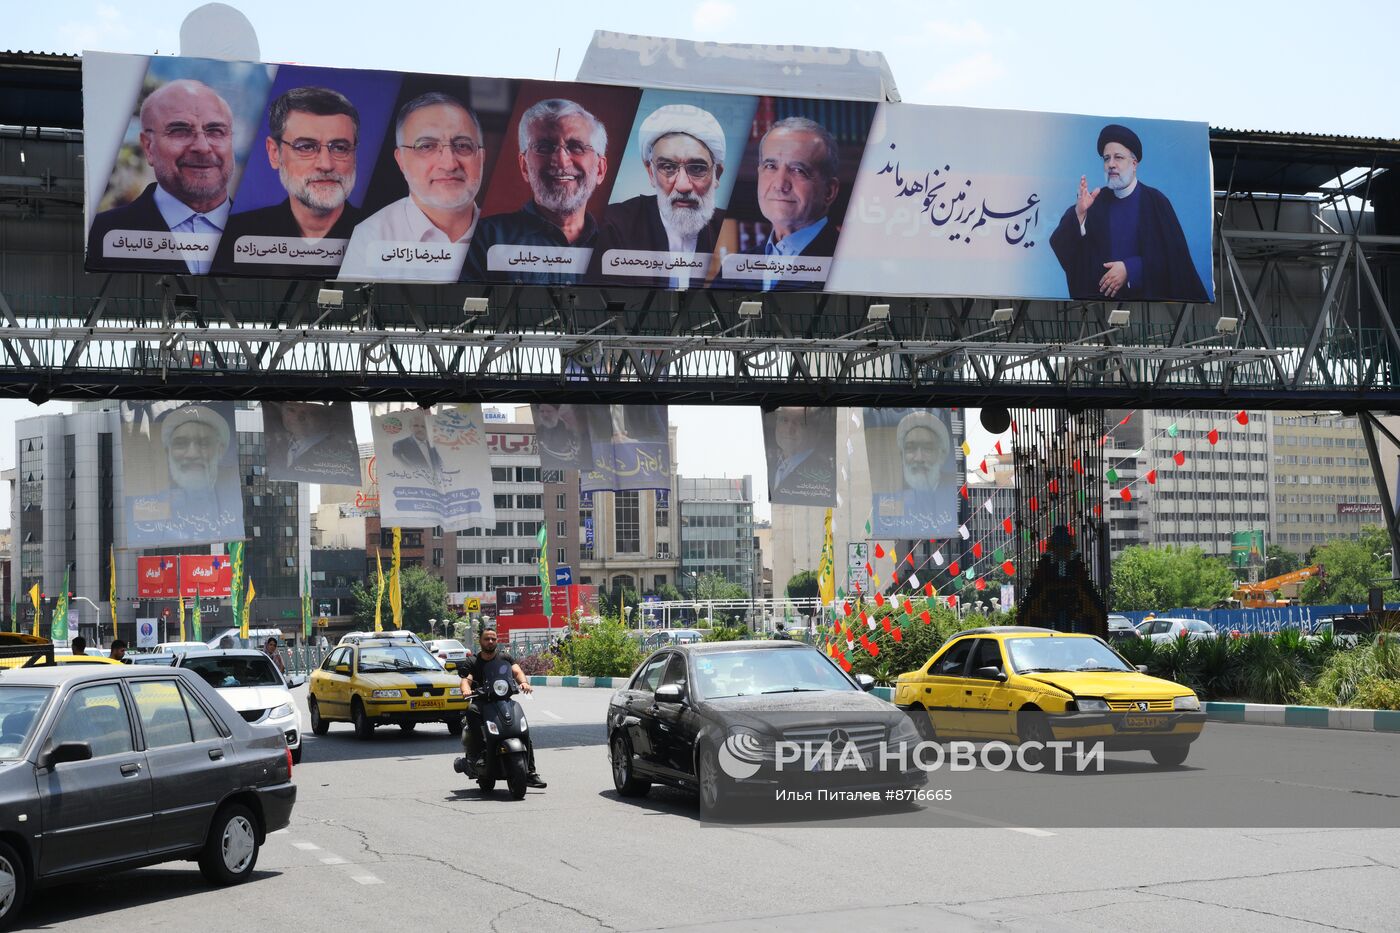  Тегеран перед президентскими выборами